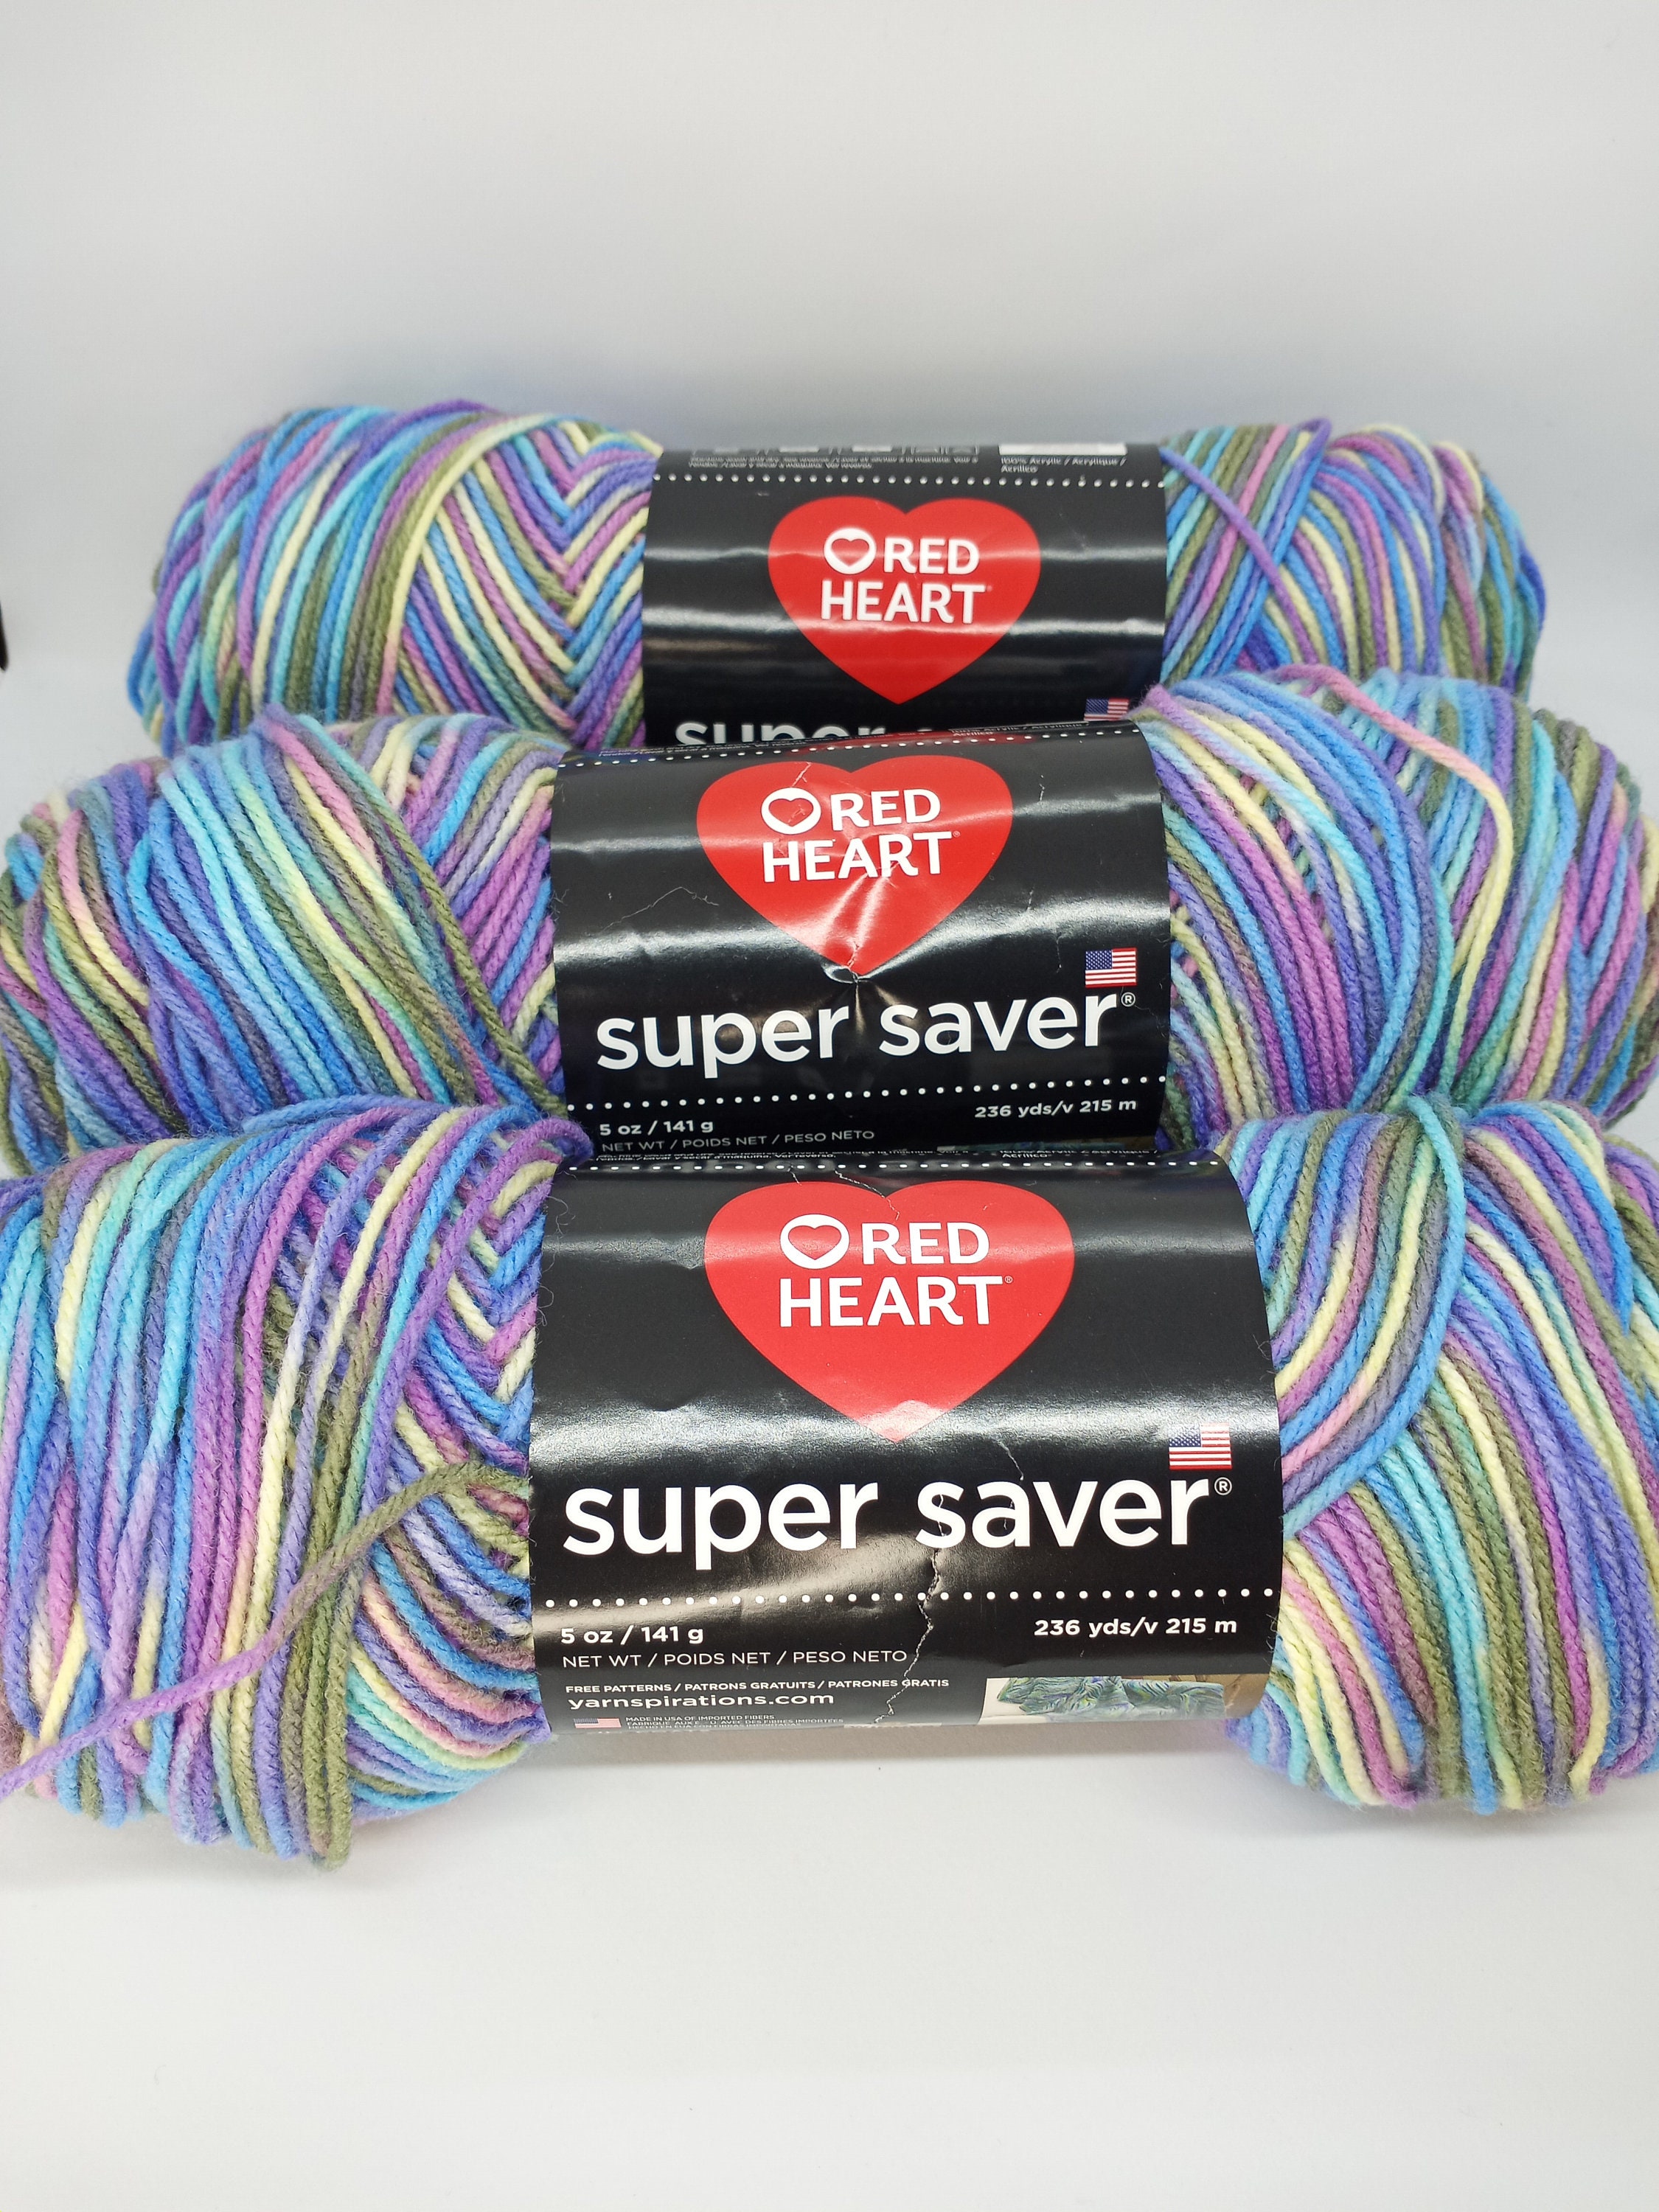  RED HEART E300.0886 Super Saver Yarn, Blue